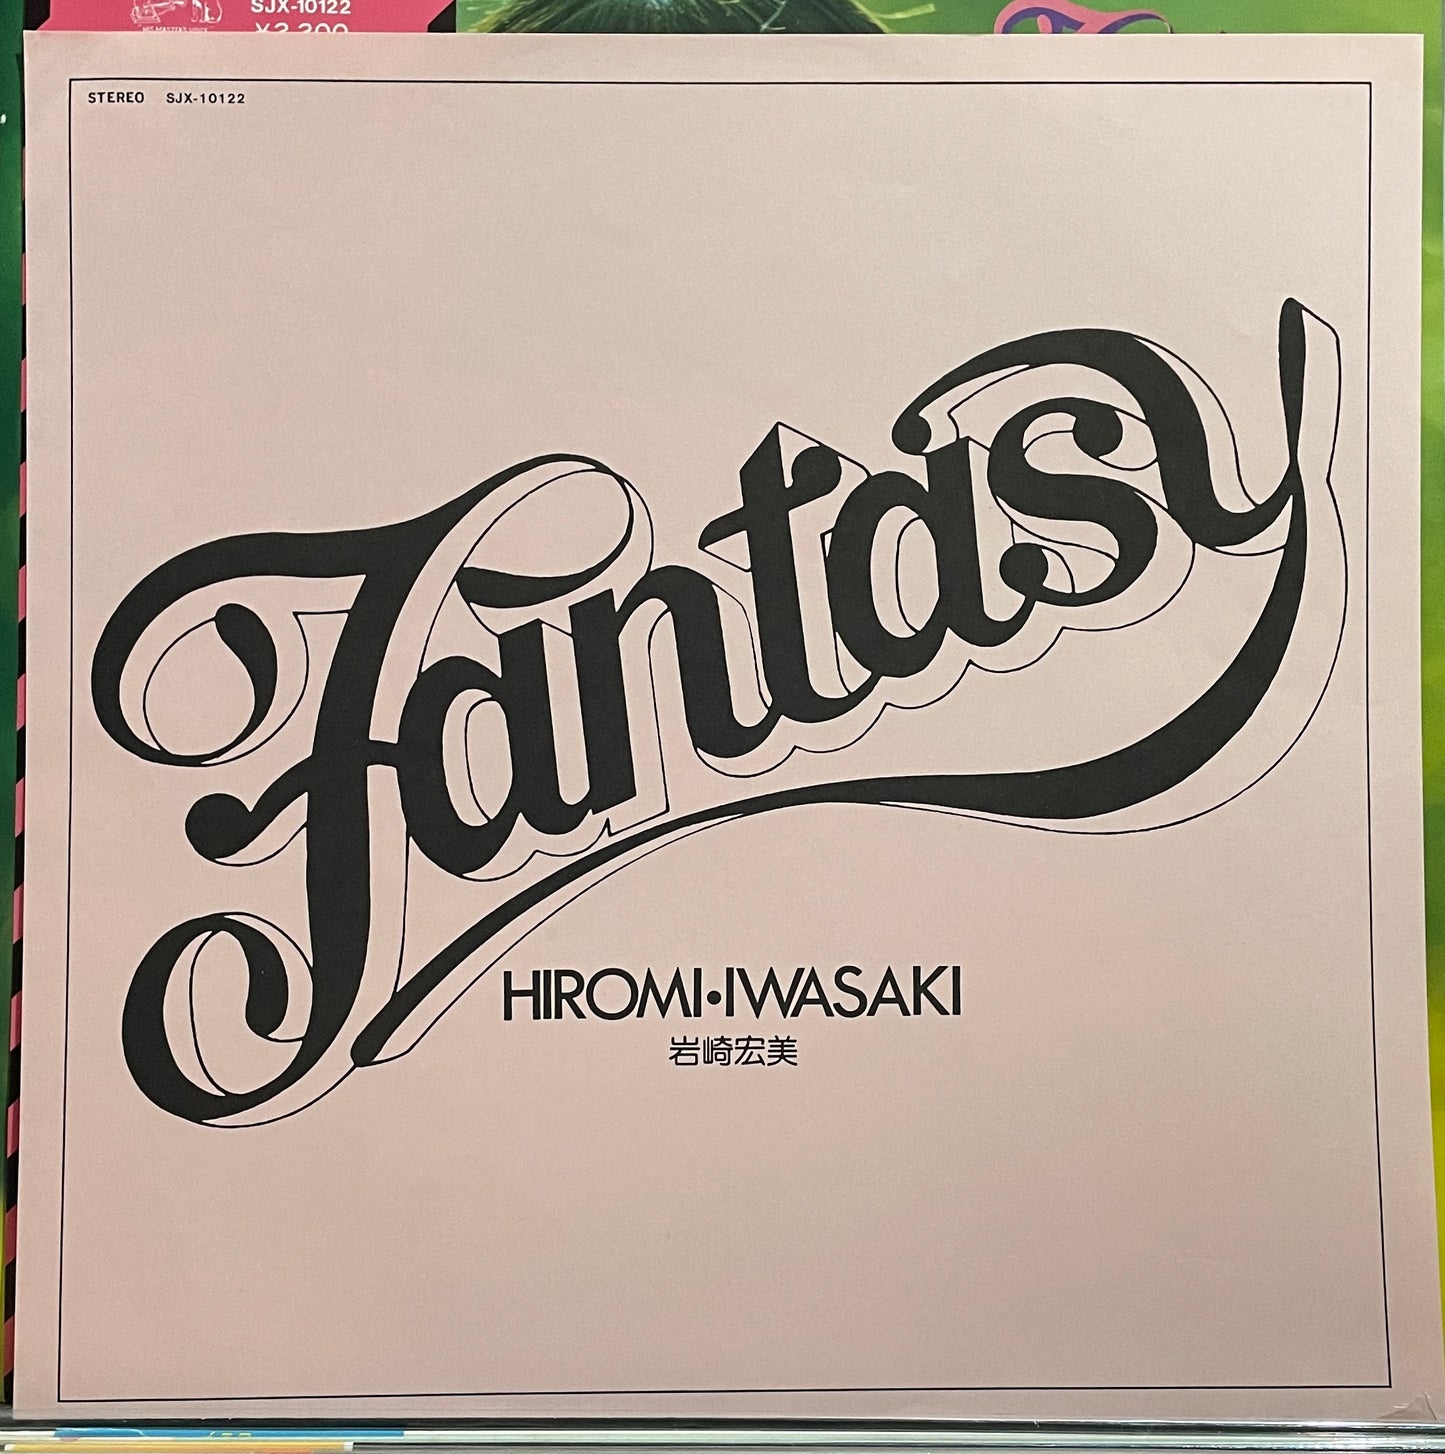 Hiromi Iwasaki “Fantasy” (1976)